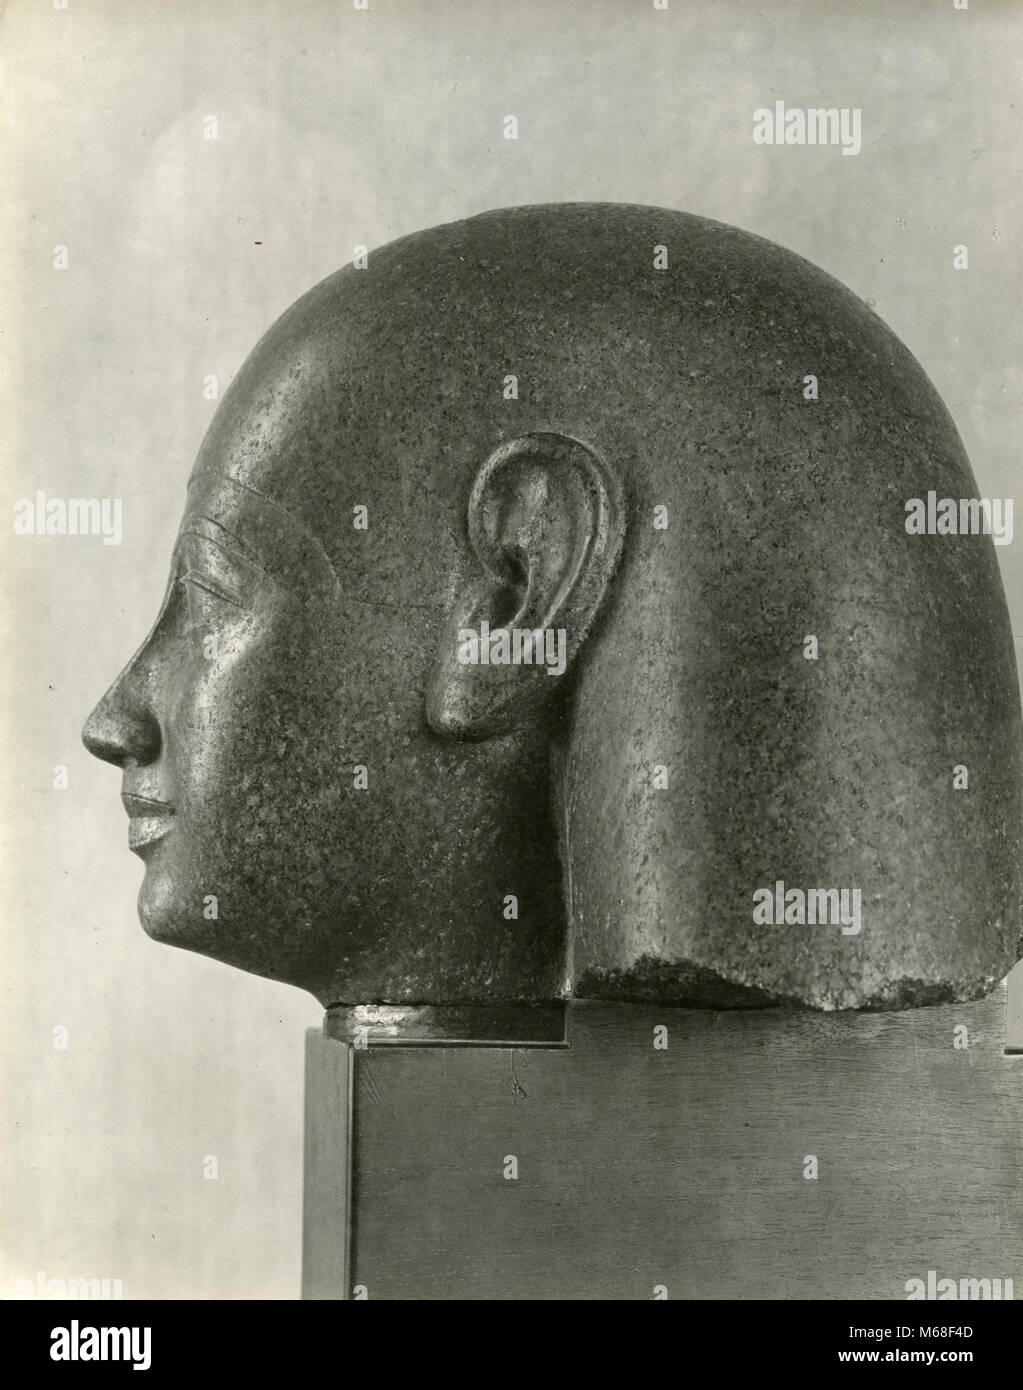 Cabeza del faraón egipcio antiguo estatua Foto de stock